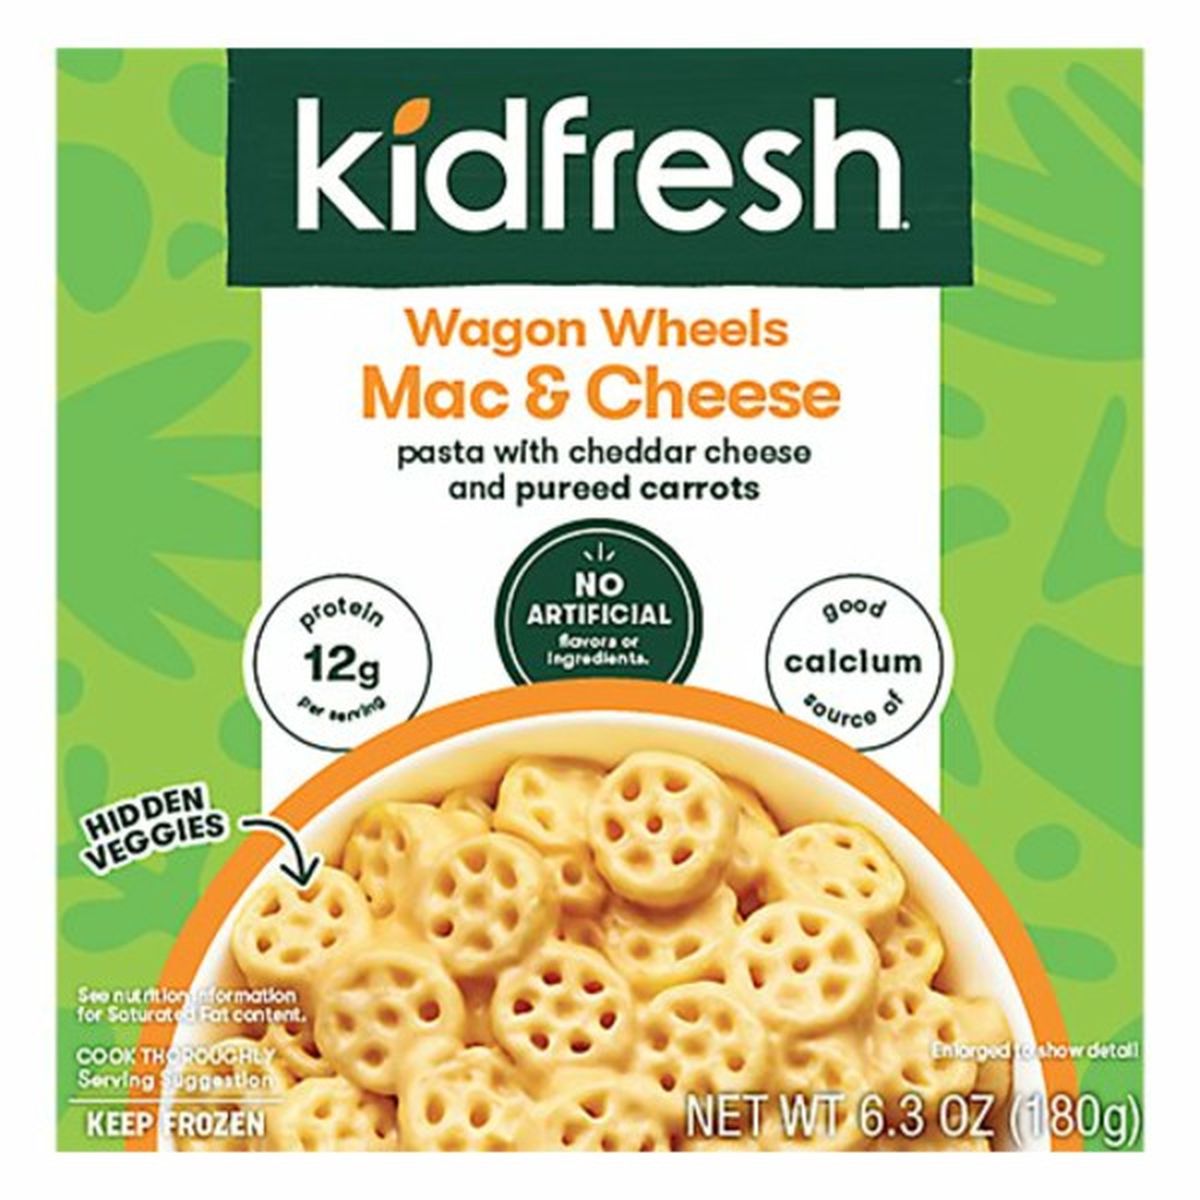 Calories in Kidfresh Mac & Cheese, Wagon Wheels